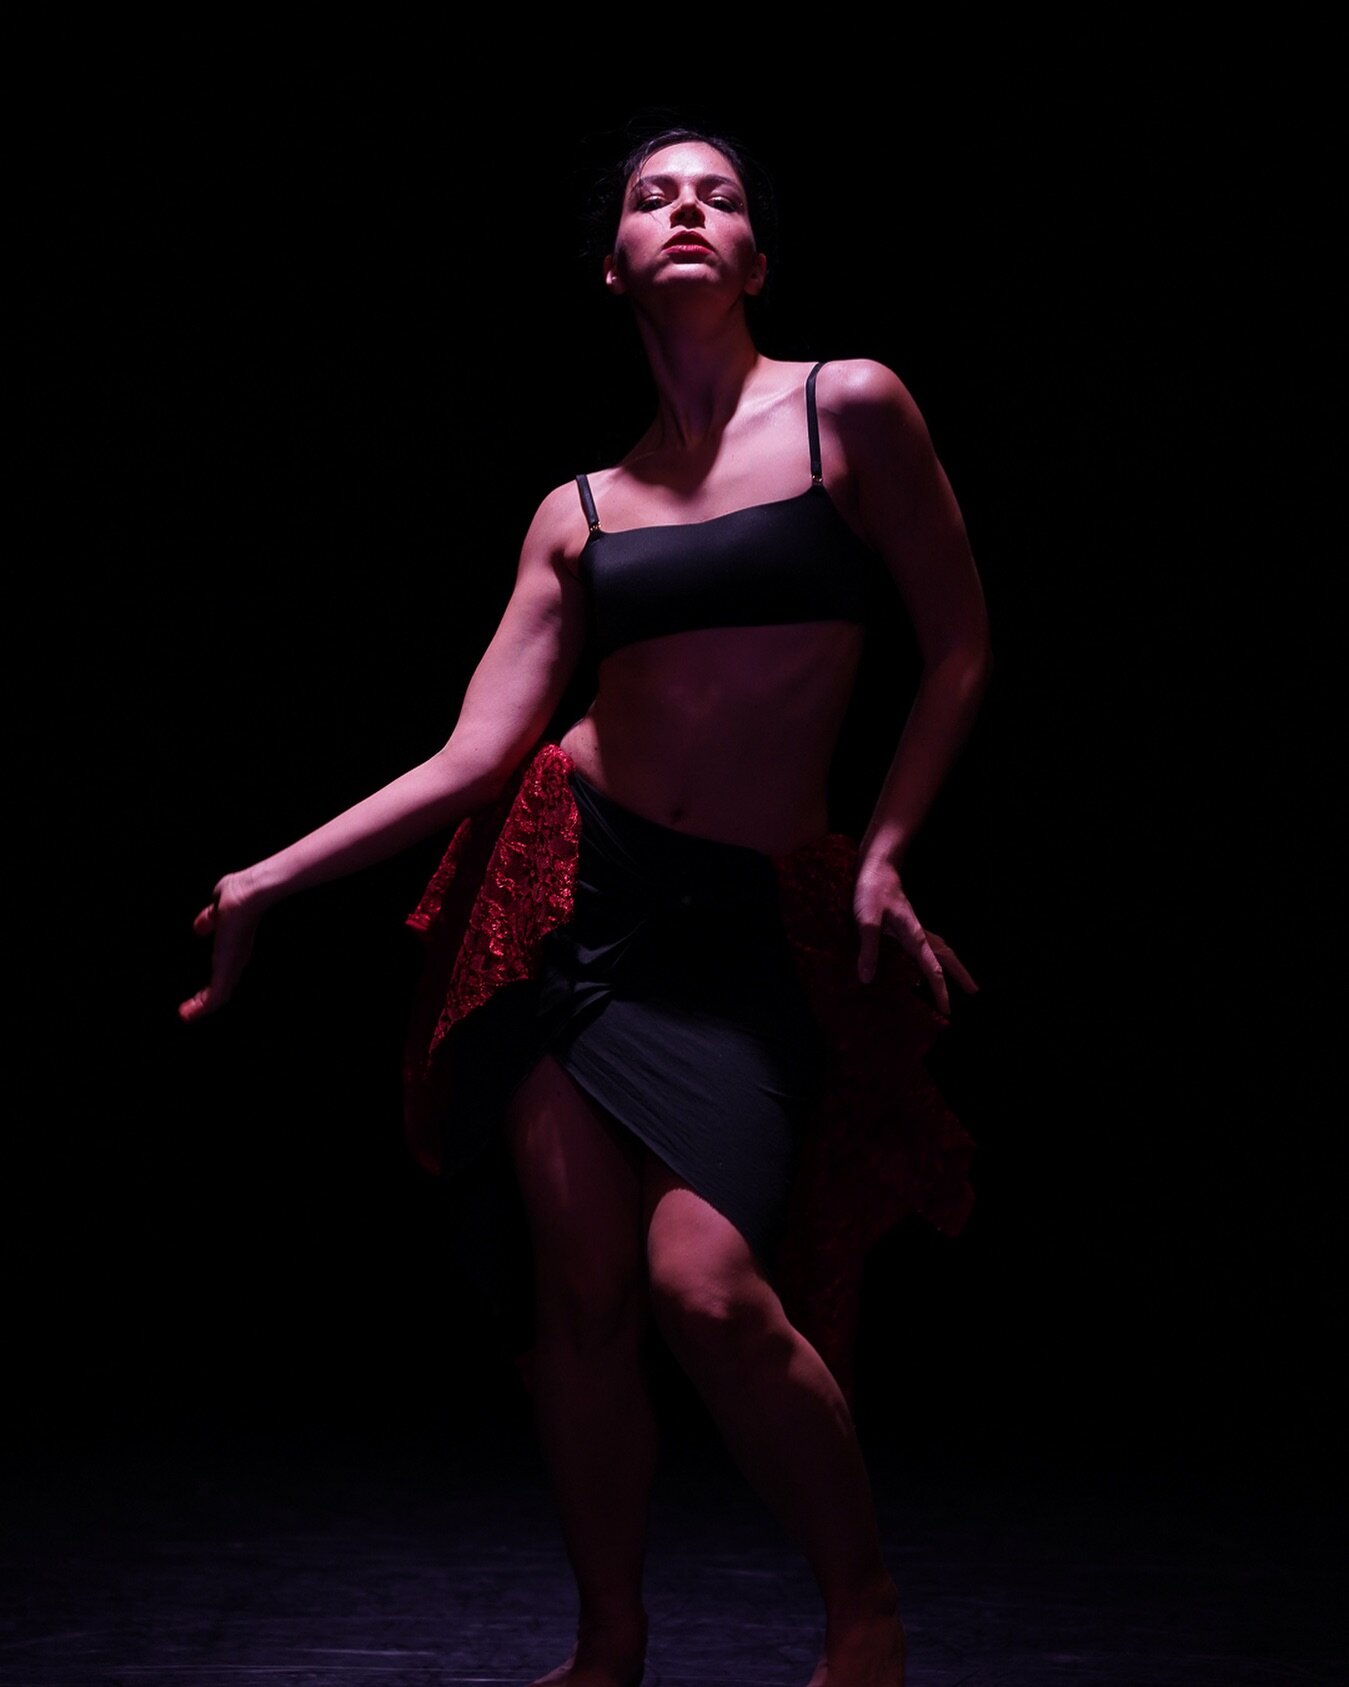 A fantastic catch by @nobusamafotografie at @motionsberlin  Thank you 🙏🥰 @nobusama_go 

#bellydancefusion #fusion #fusionbellydance #fusiondance #motionsberlin #berlin #berlindance #berlindancer #dancer #dancerphotography #dance #българка #танцьорк